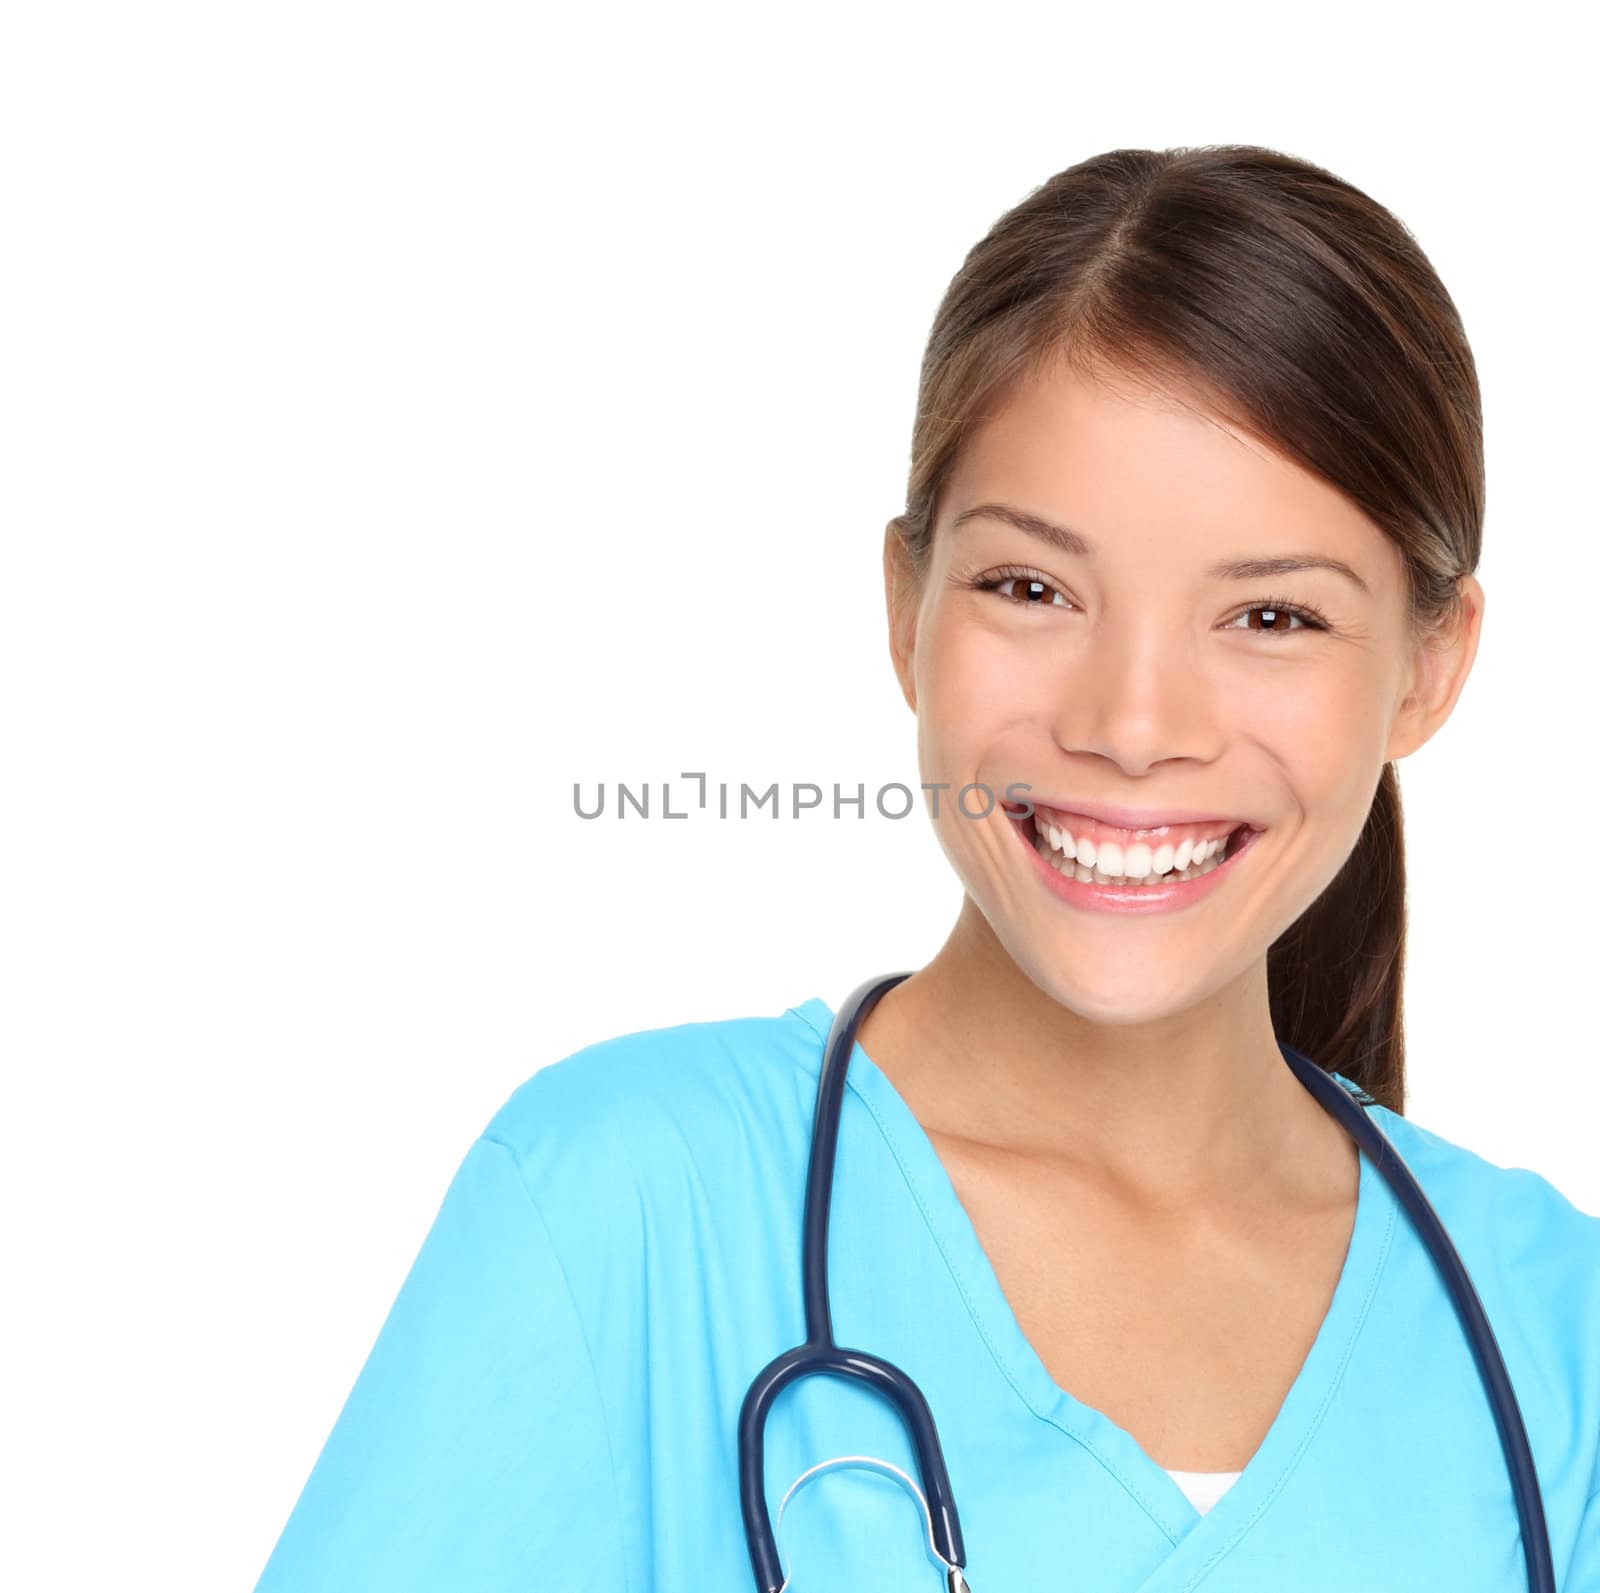 Nurse smiling portrait on white background.